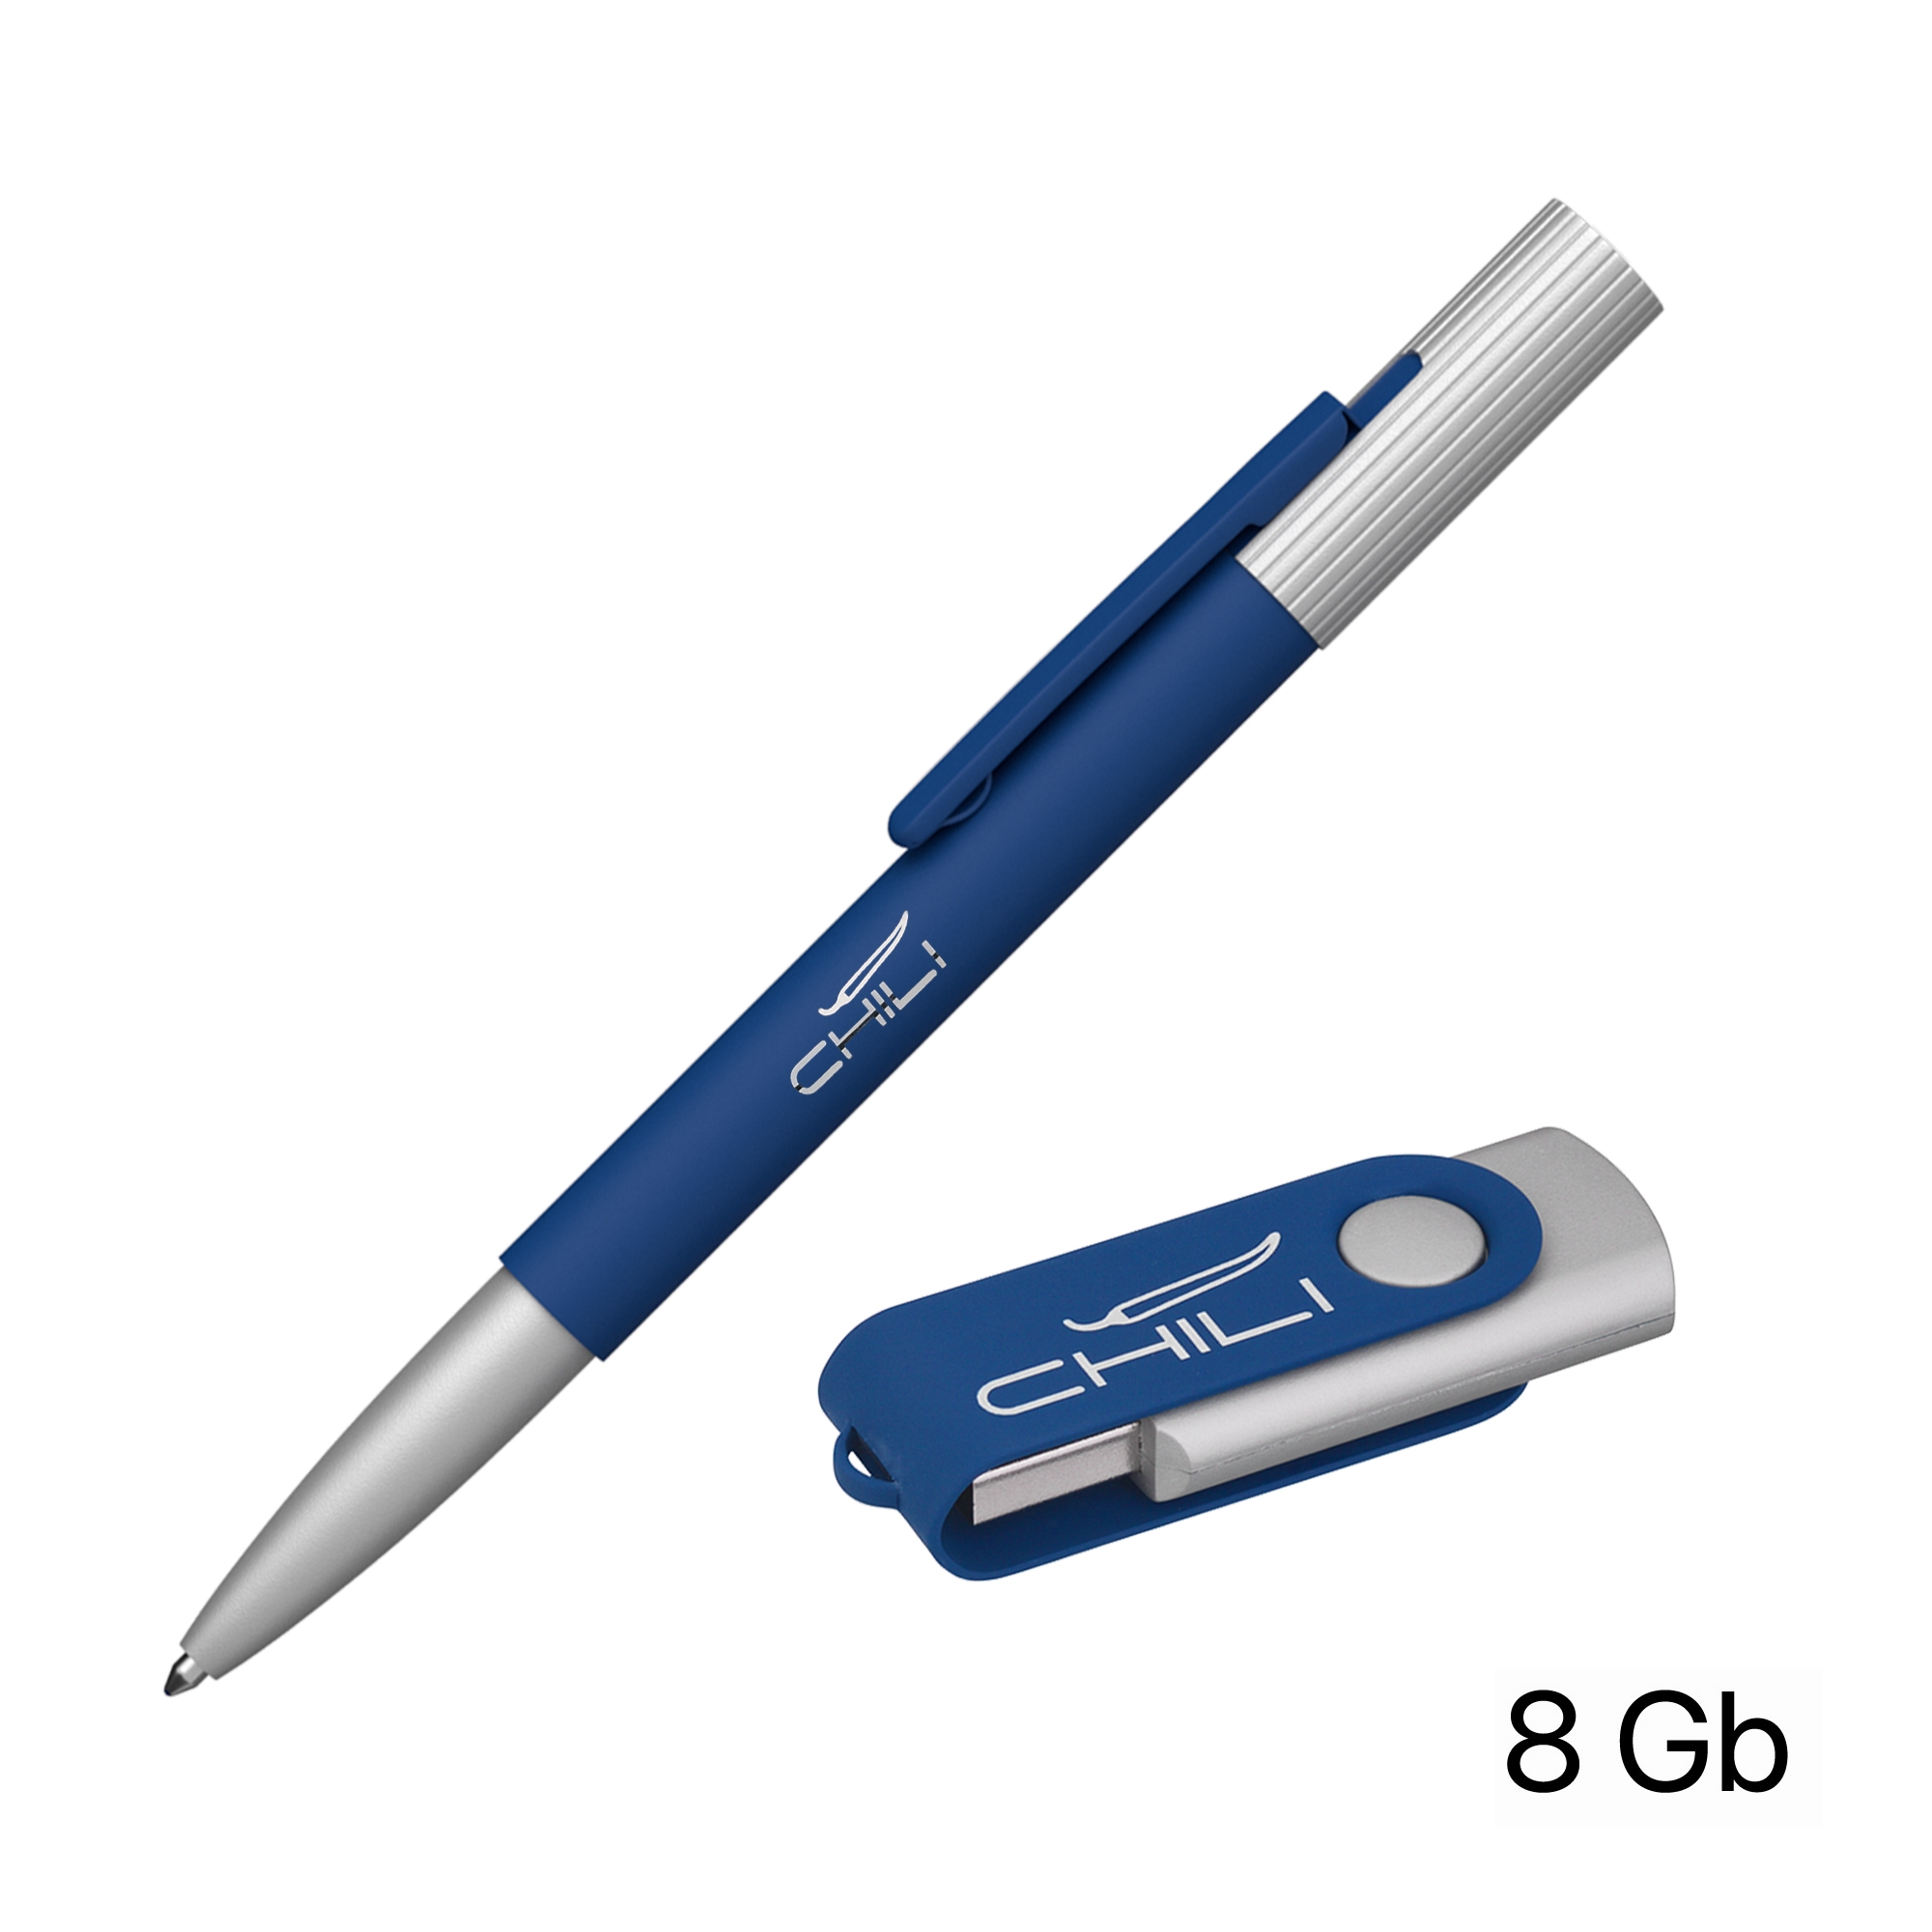 Набор ручка "Clas" + флеш-карта "Vostok" 8 Гб в футляре, покрытие soft touch, синий, металл/пластик/soft touch